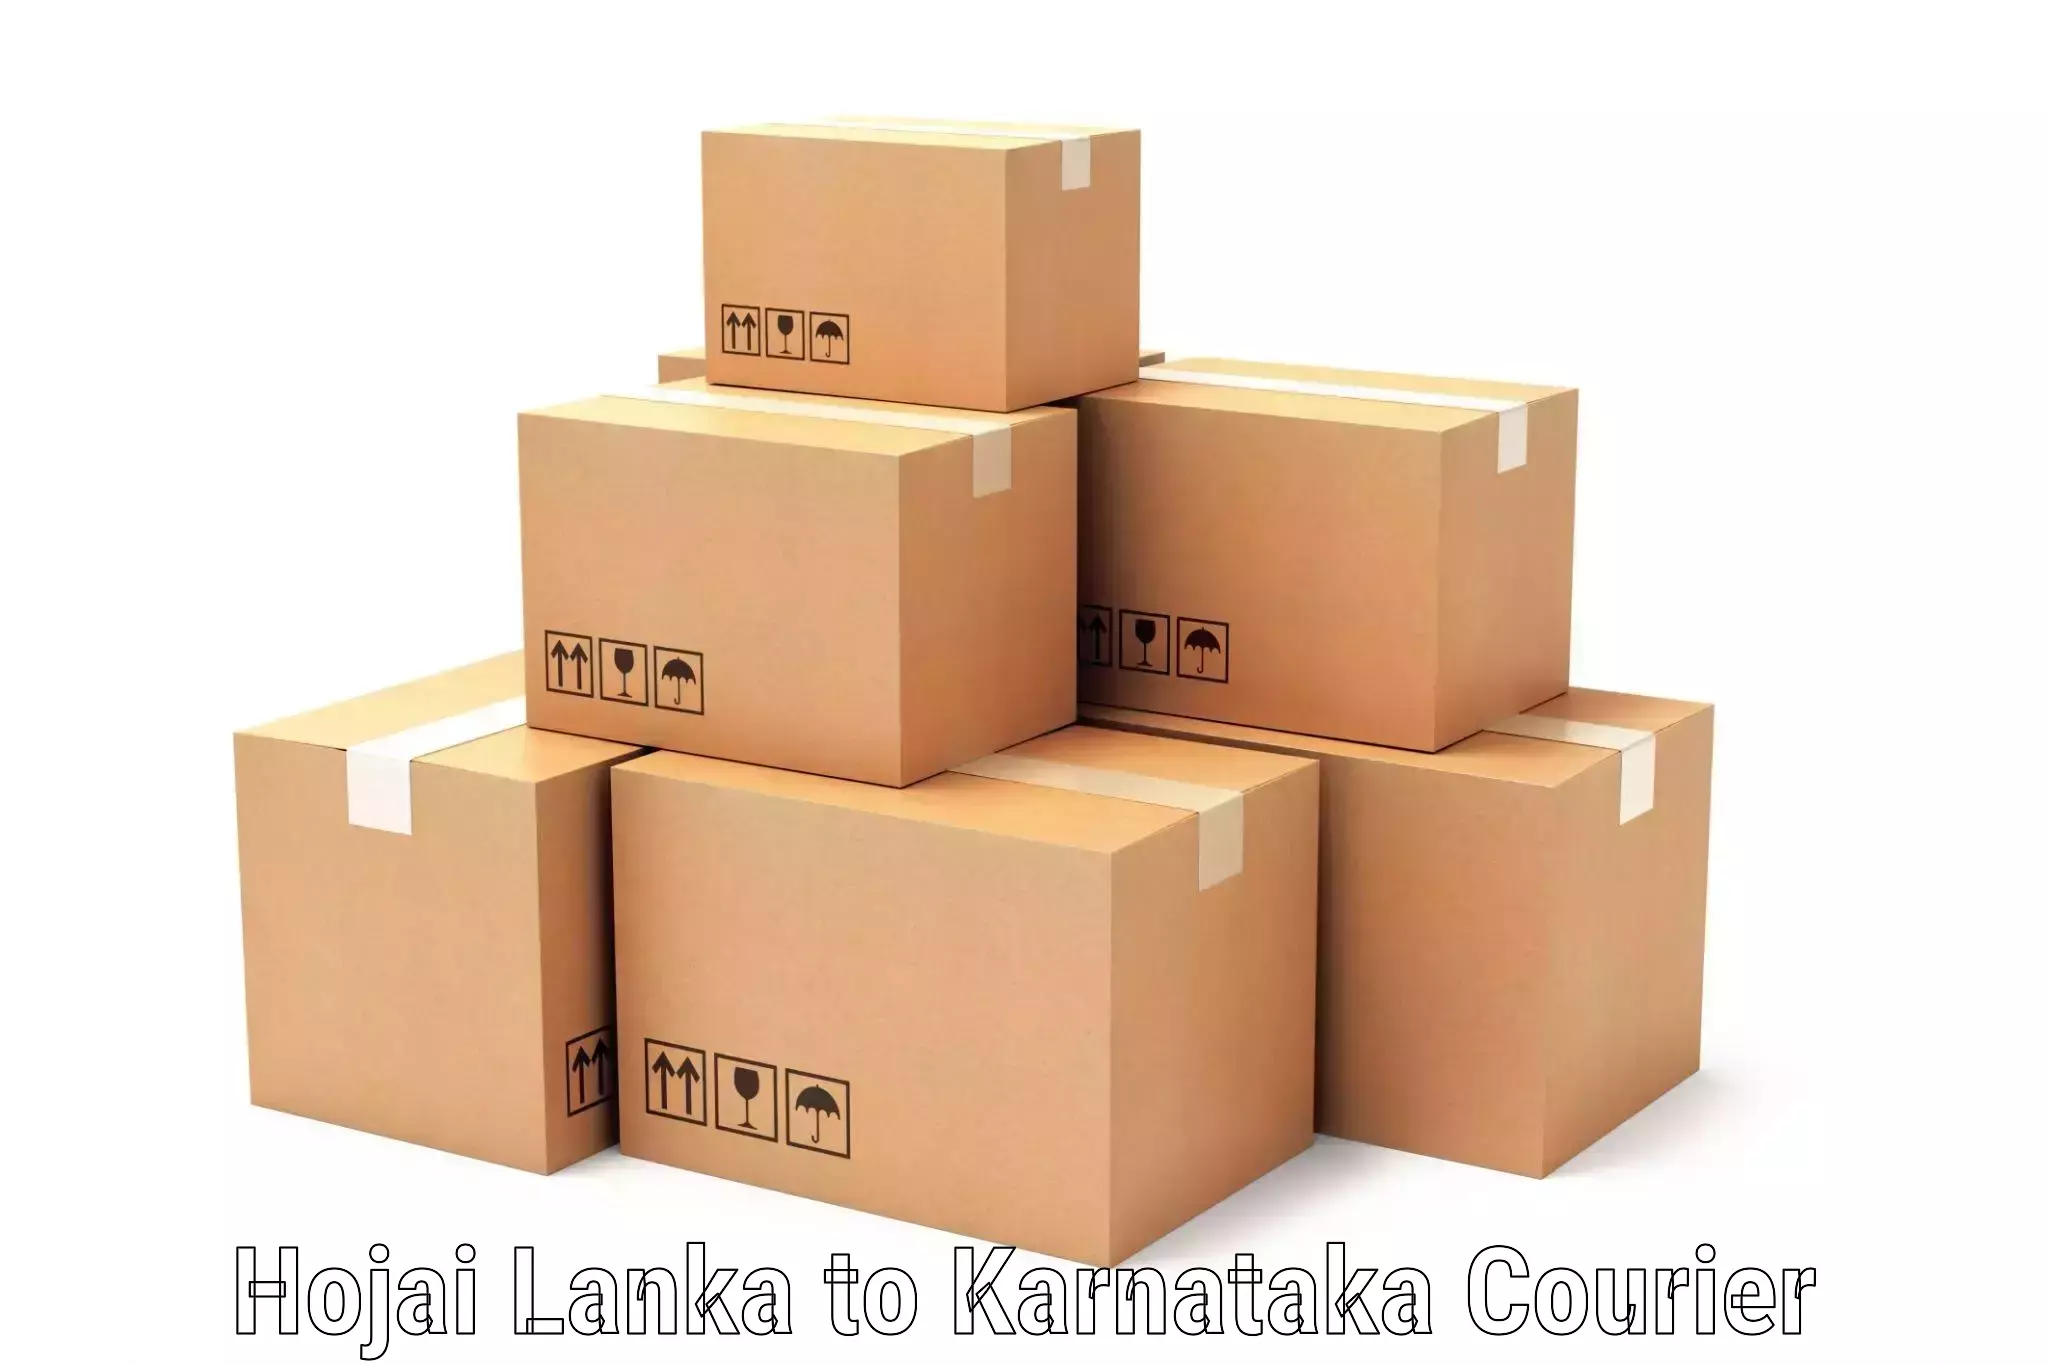 Local delivery service Hojai Lanka to Gokak